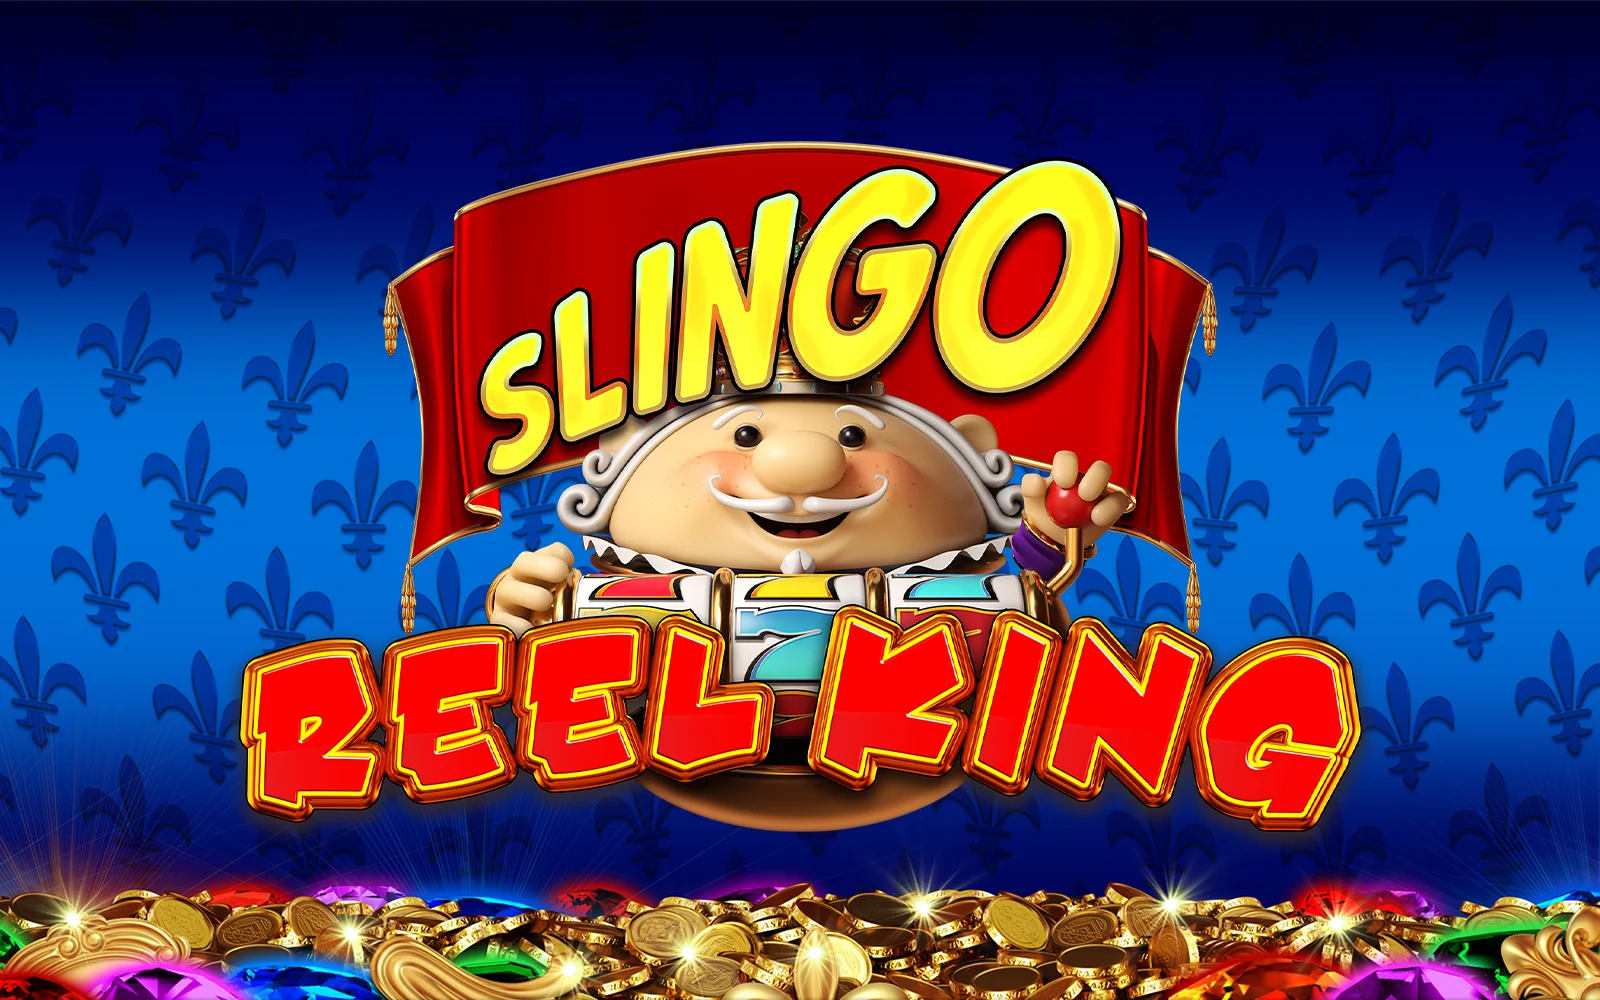 Gioca a Slingo Reel King sul casino online Starcasino.be